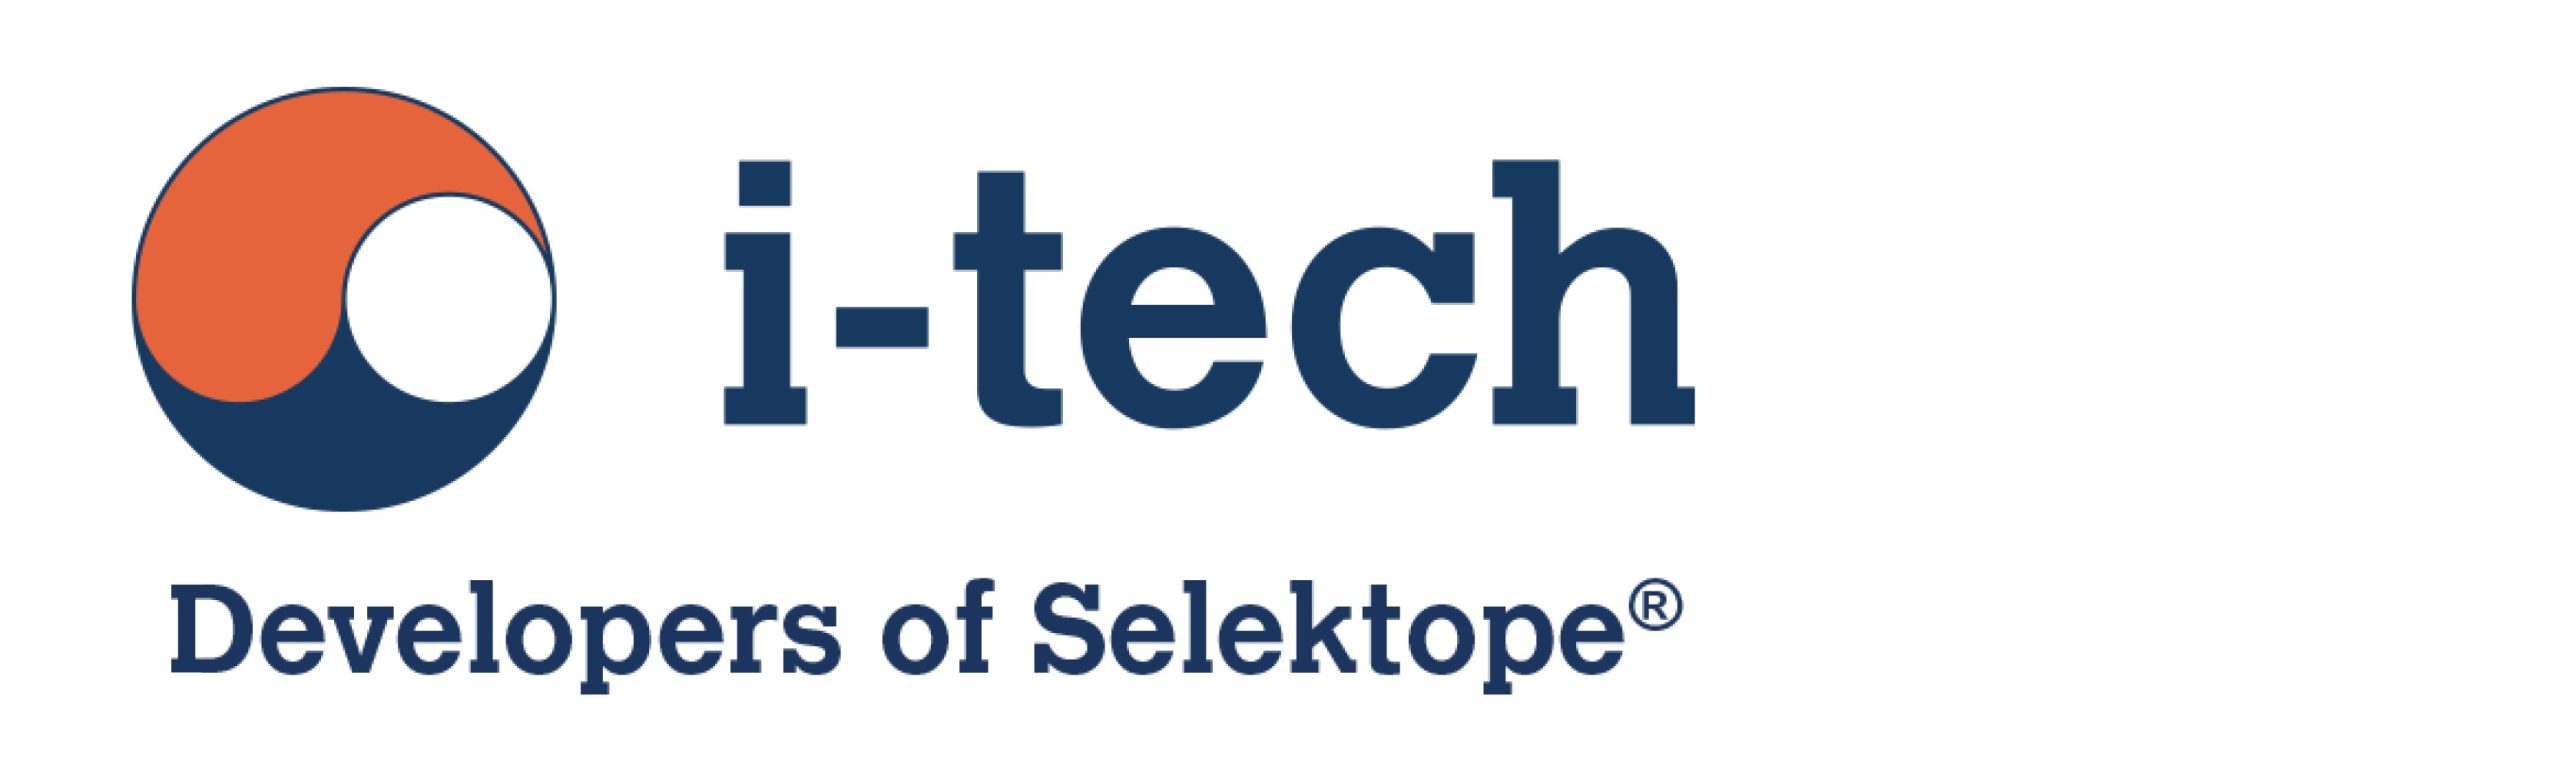 I-Tech developers of Selektope large 2